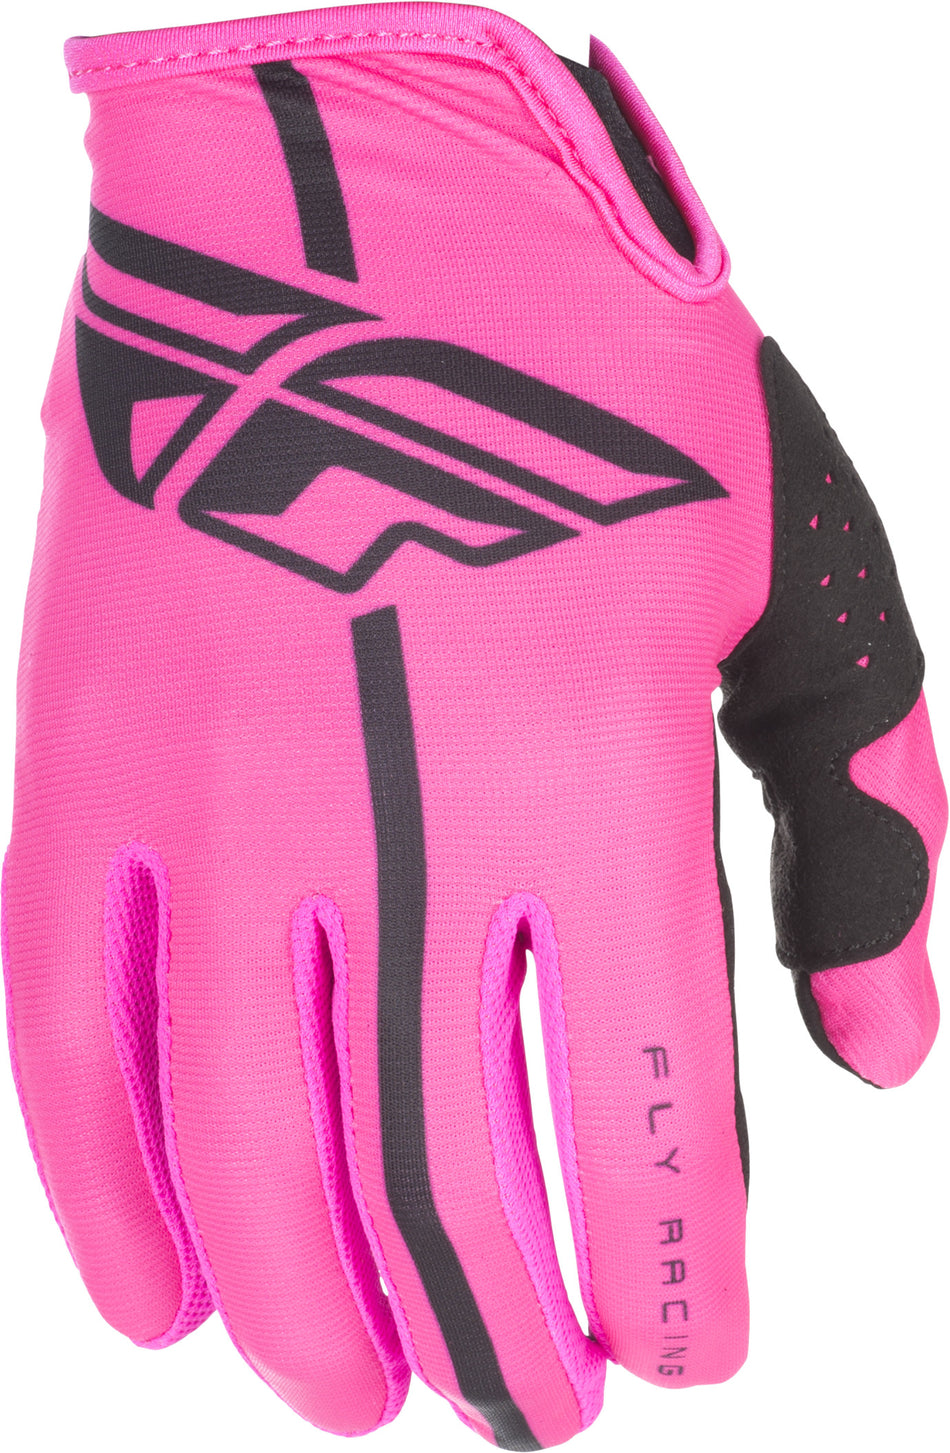 FLY RACING Lite Gloves Neon Pink/Black Sz 11 371-01711